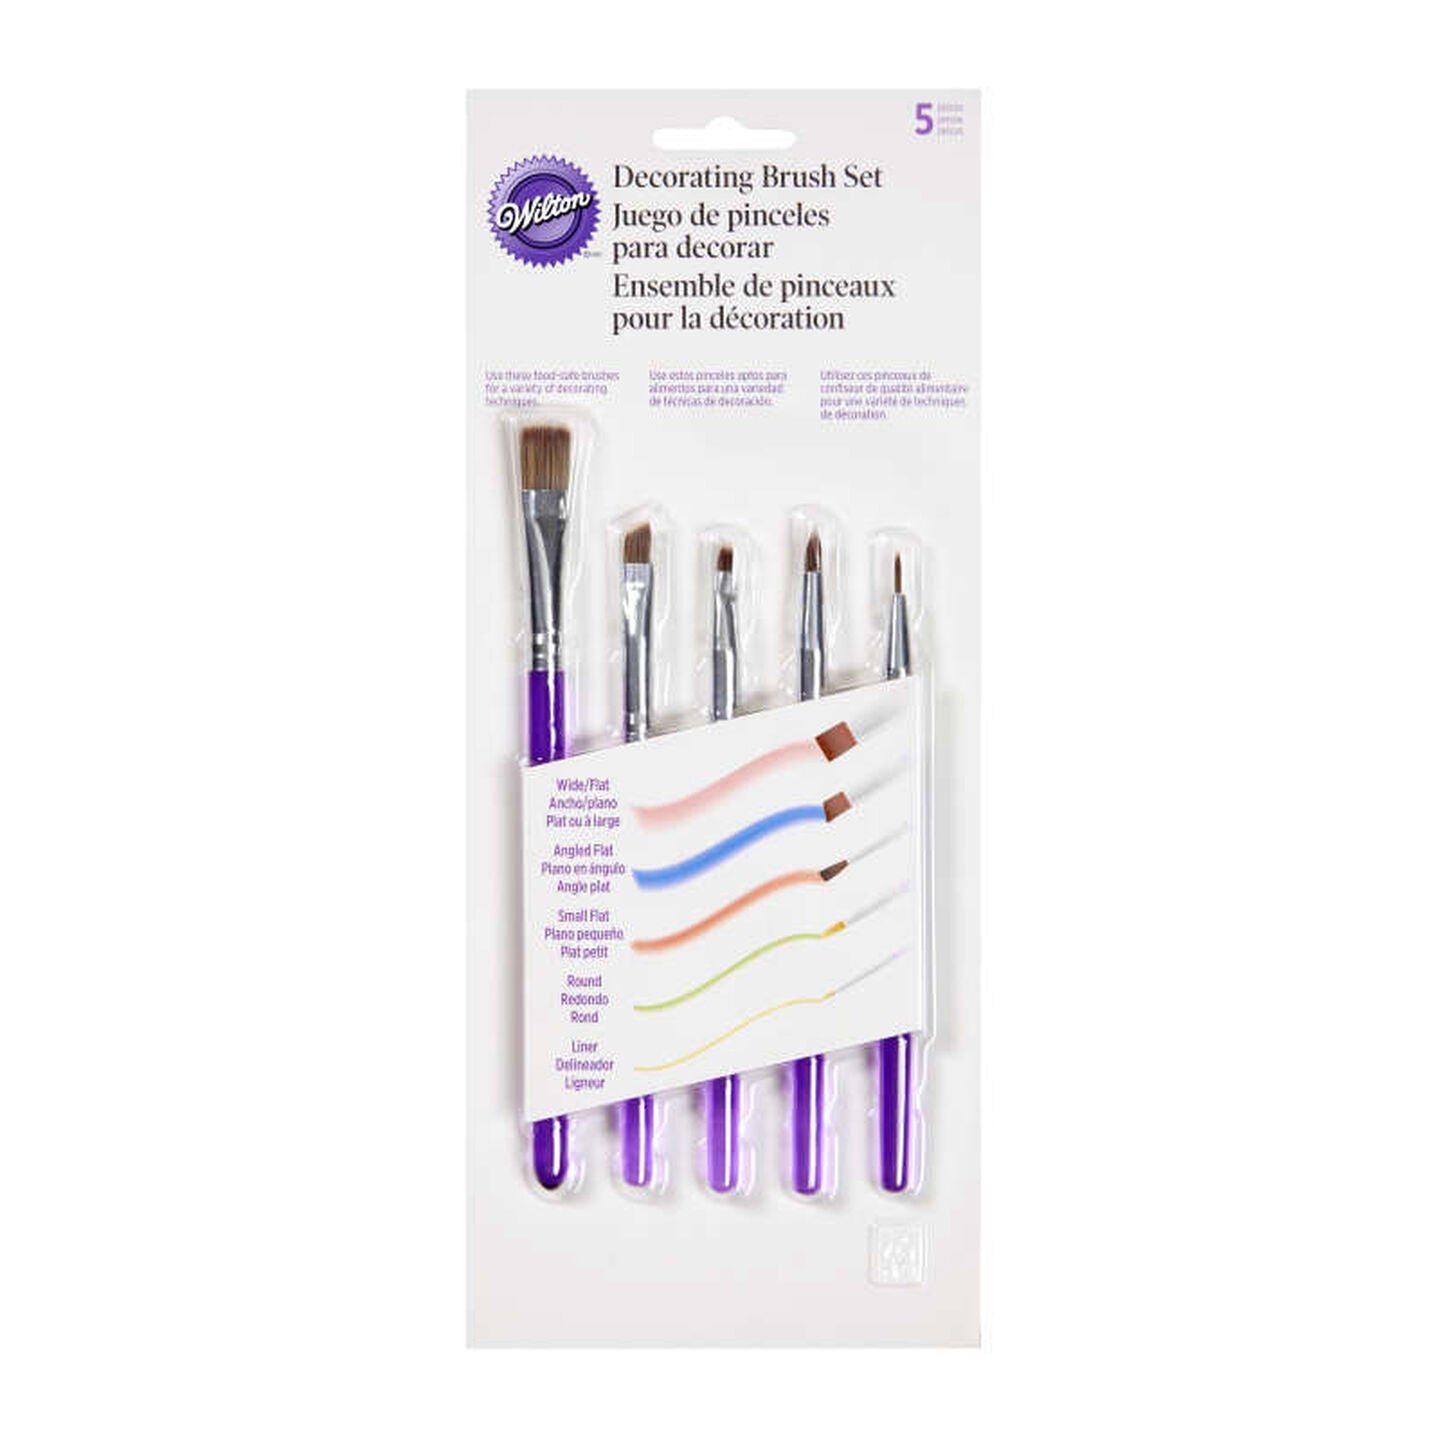 PME Foodsafe Fine Paint Brush - Set of 5